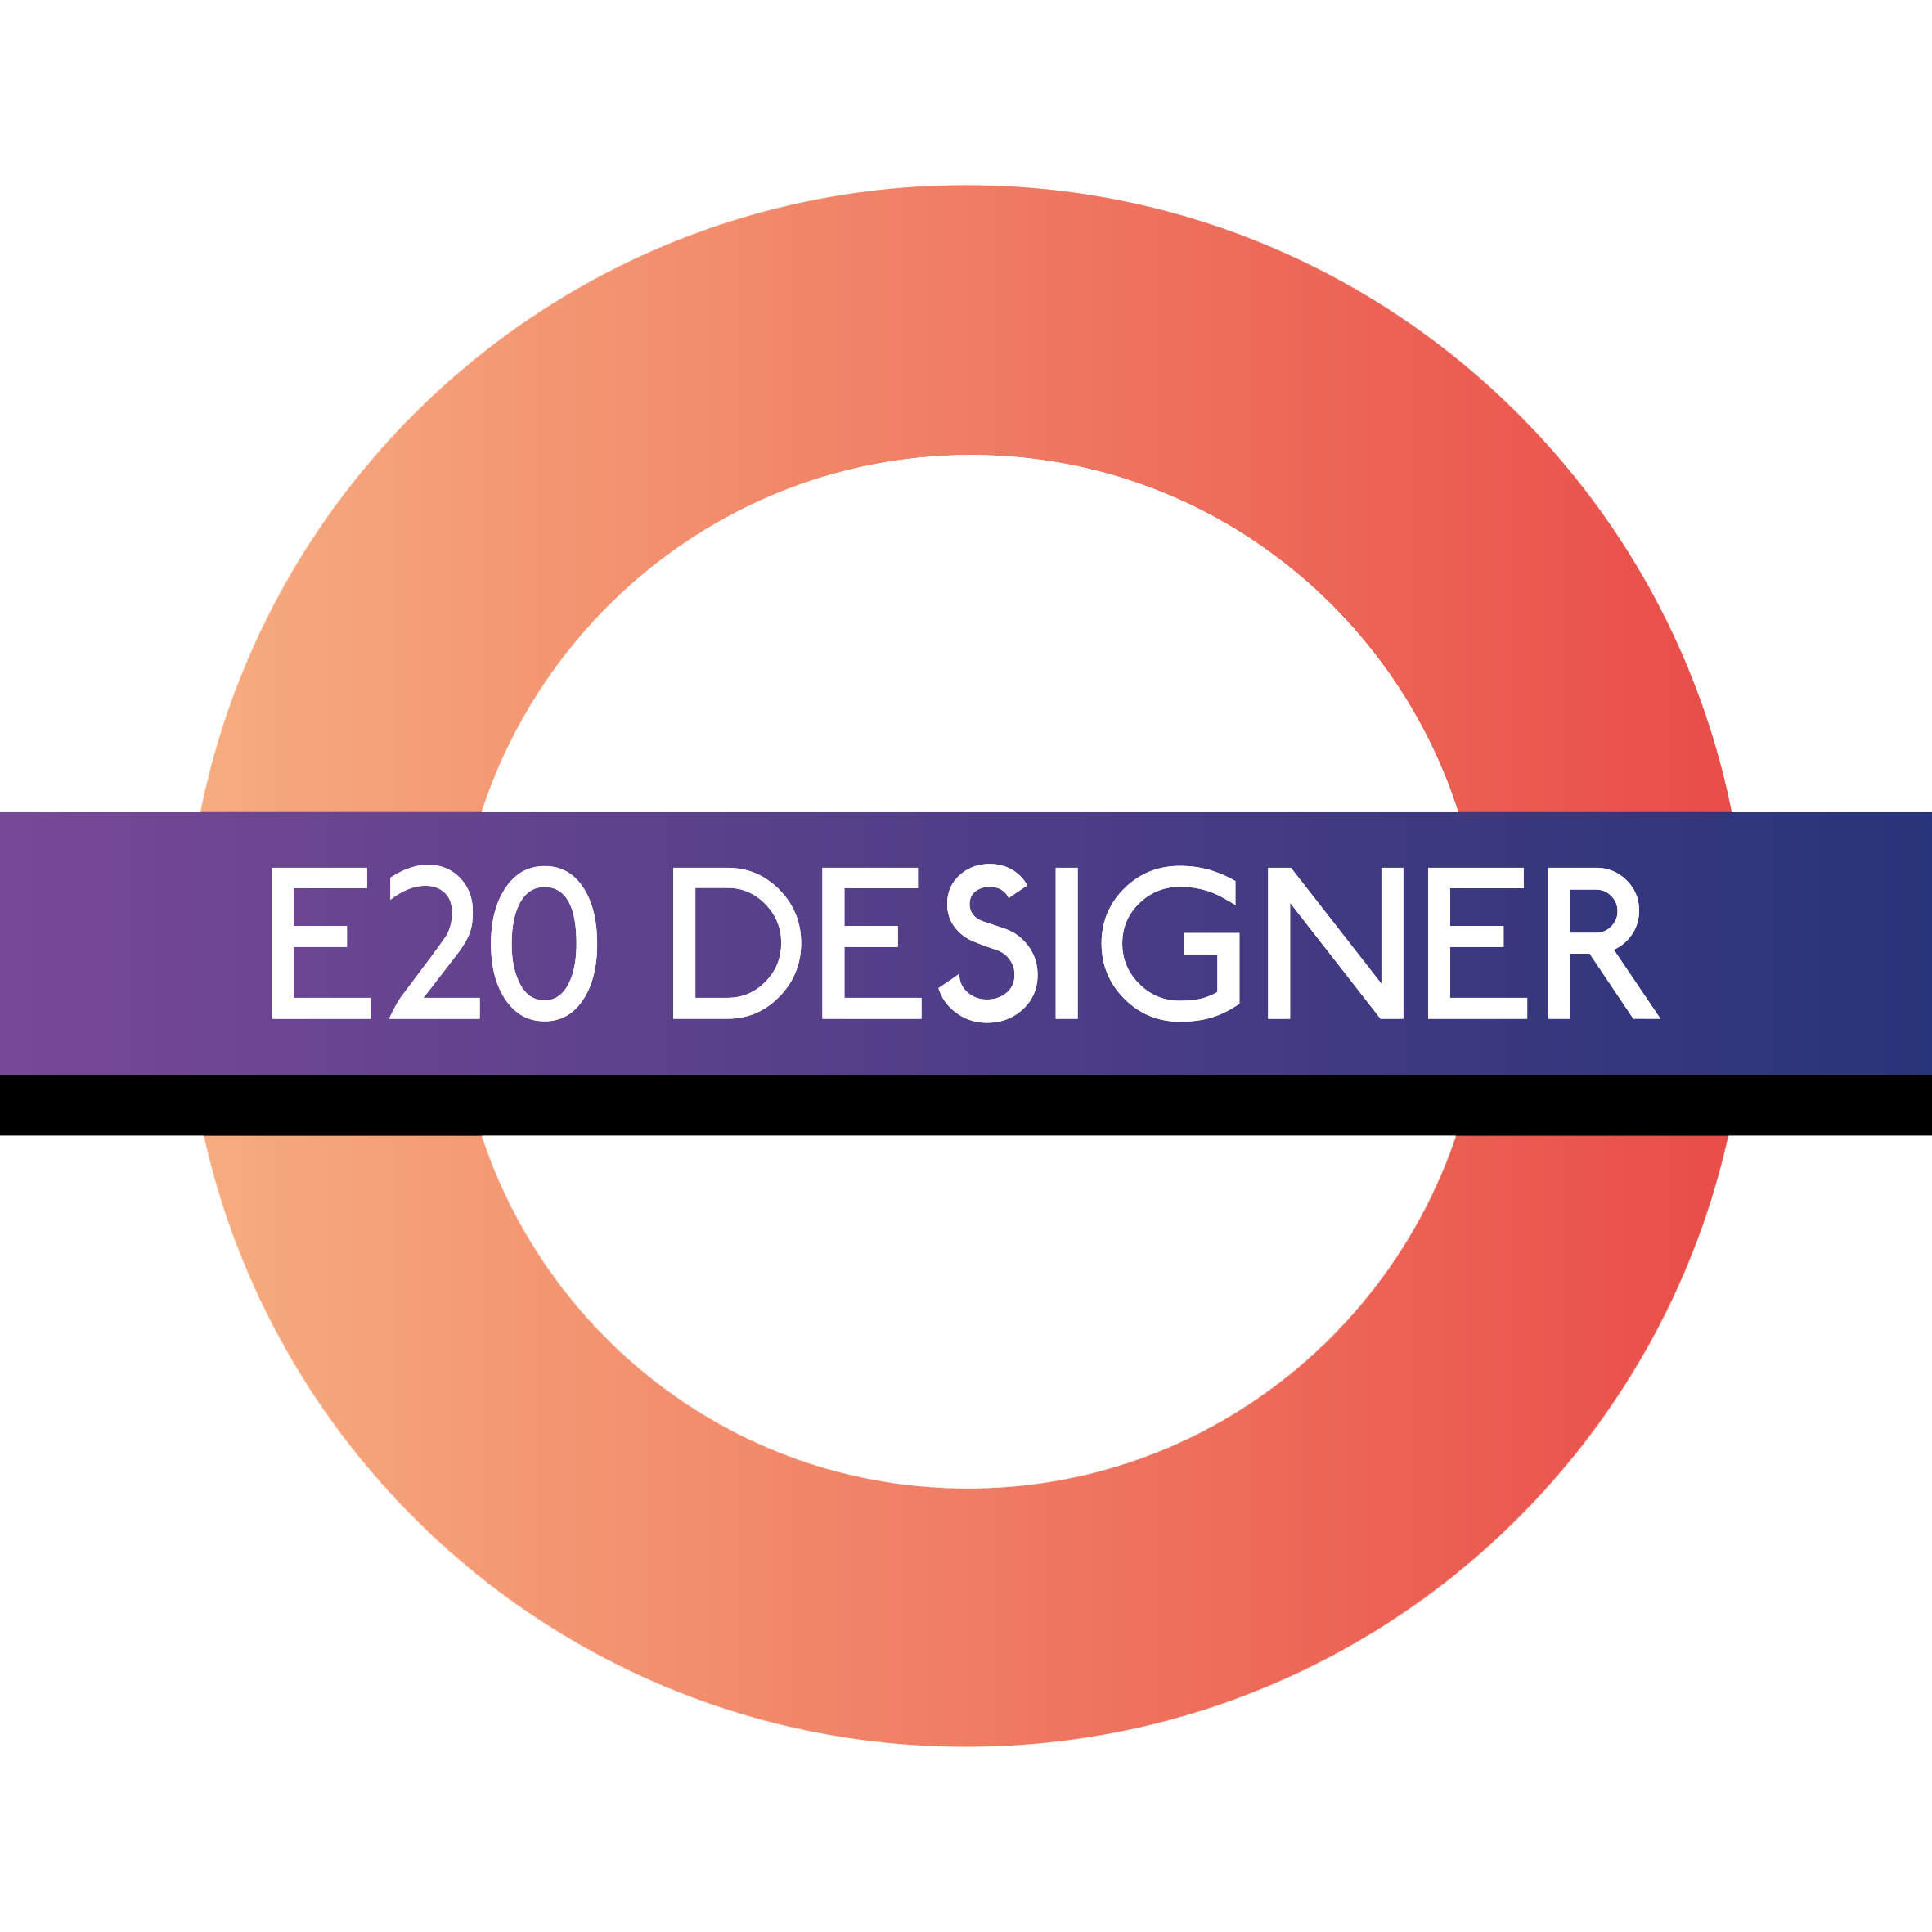 E20 Designer